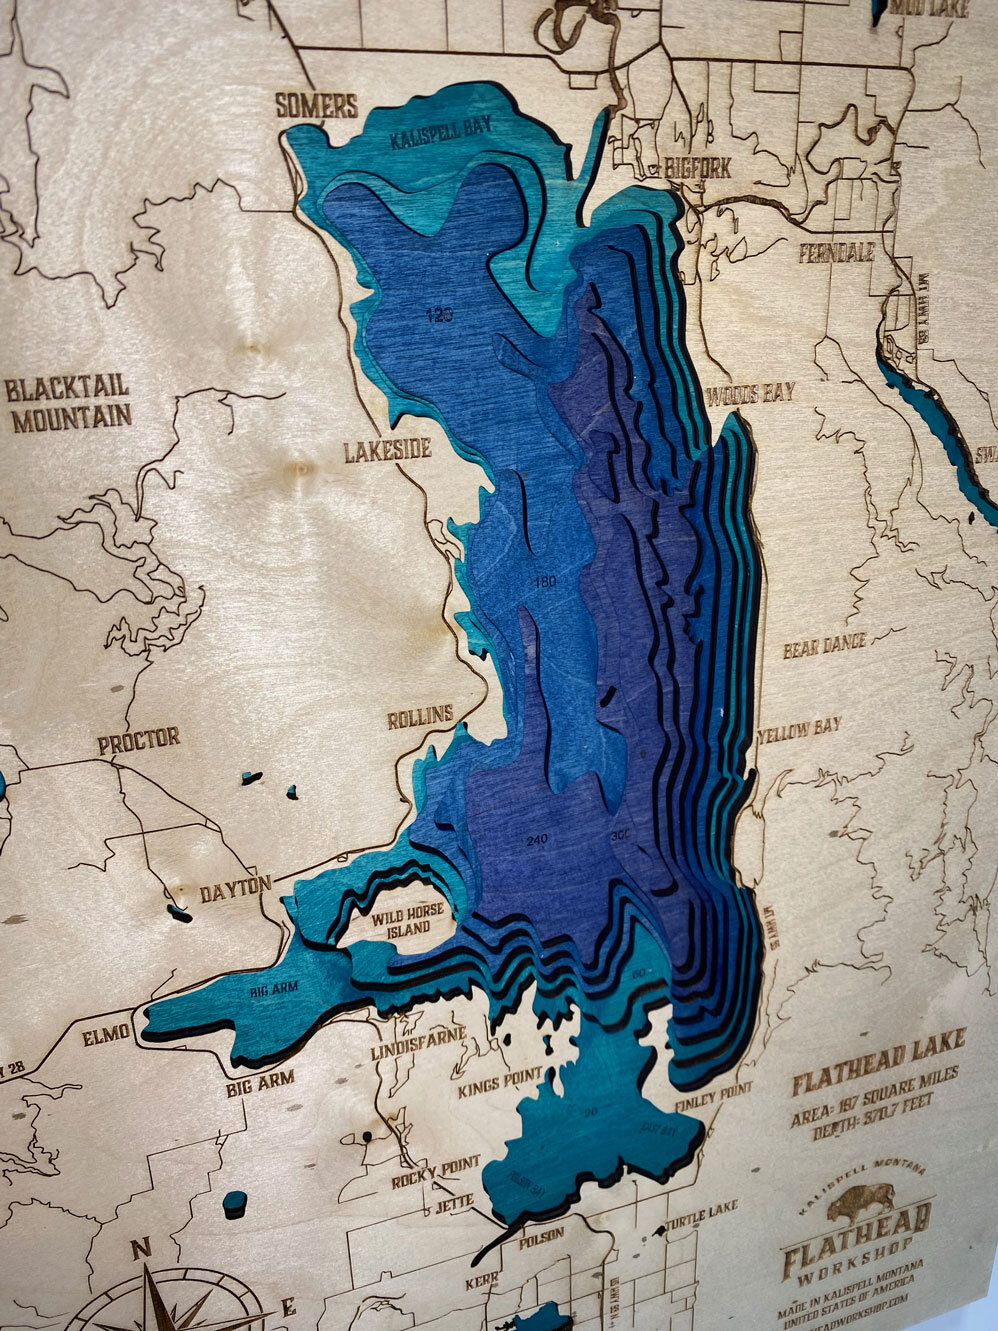 Flathead Lake Map LG 3 